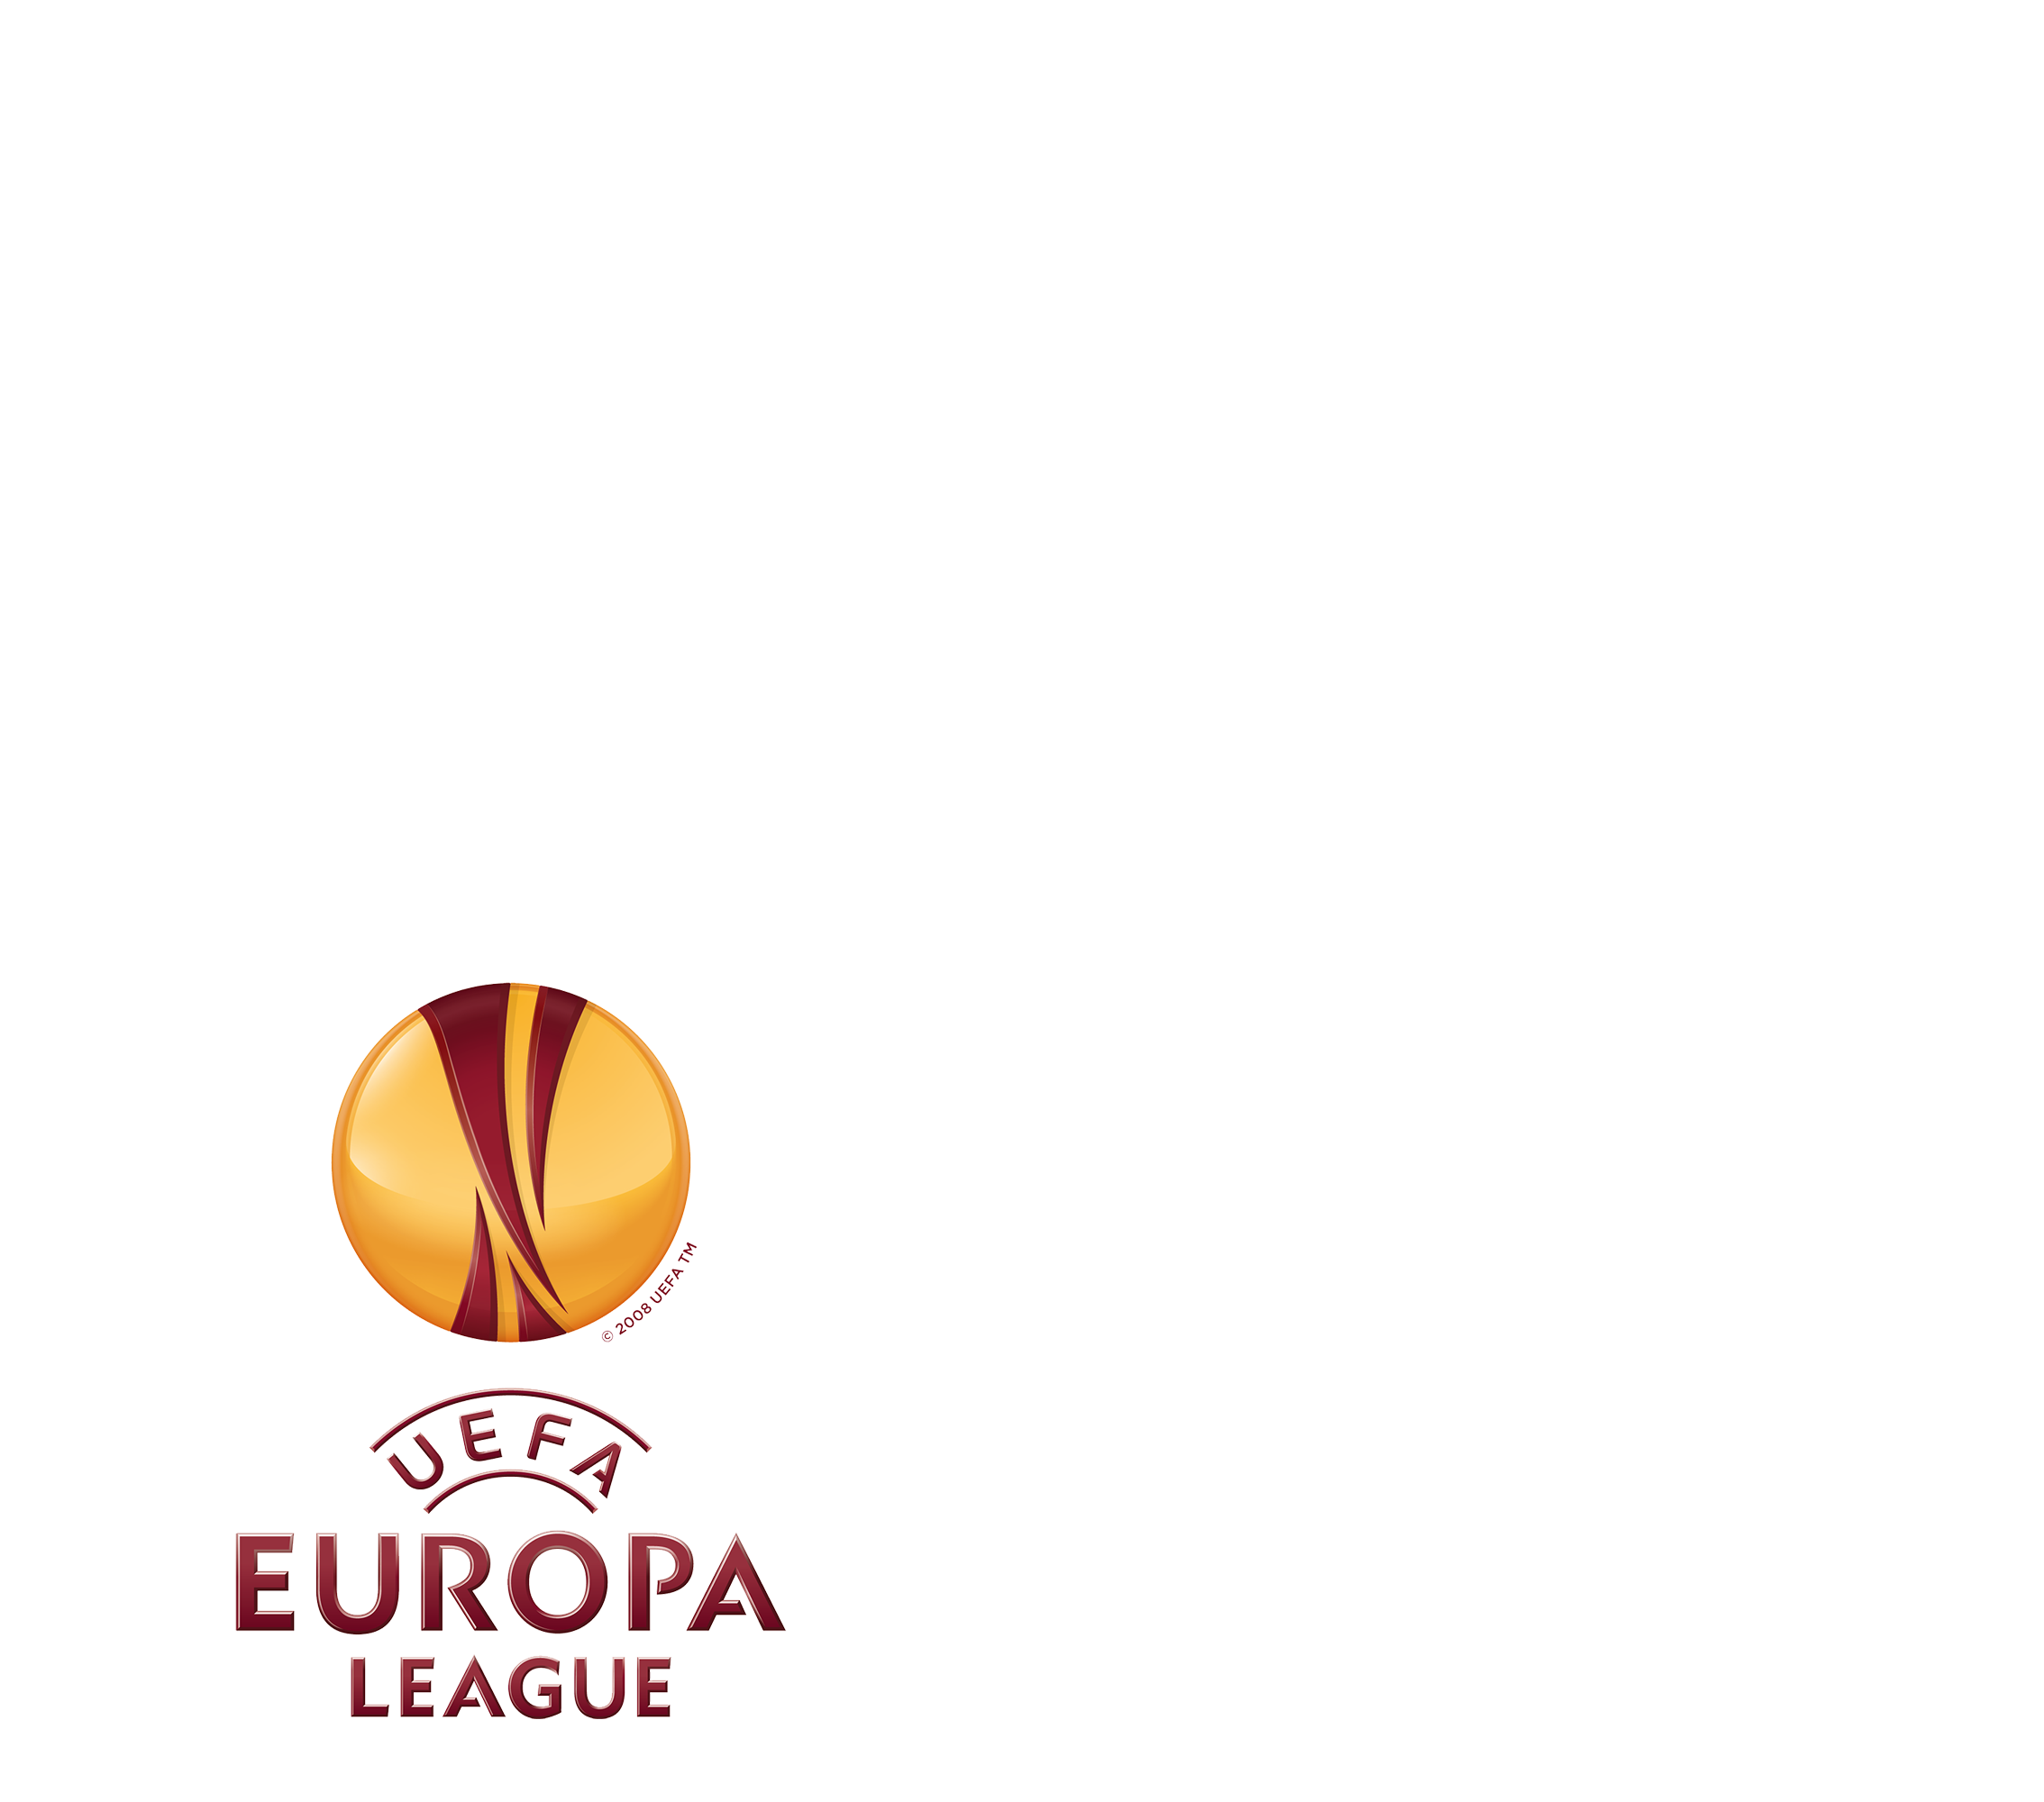 Europa League 2016/17